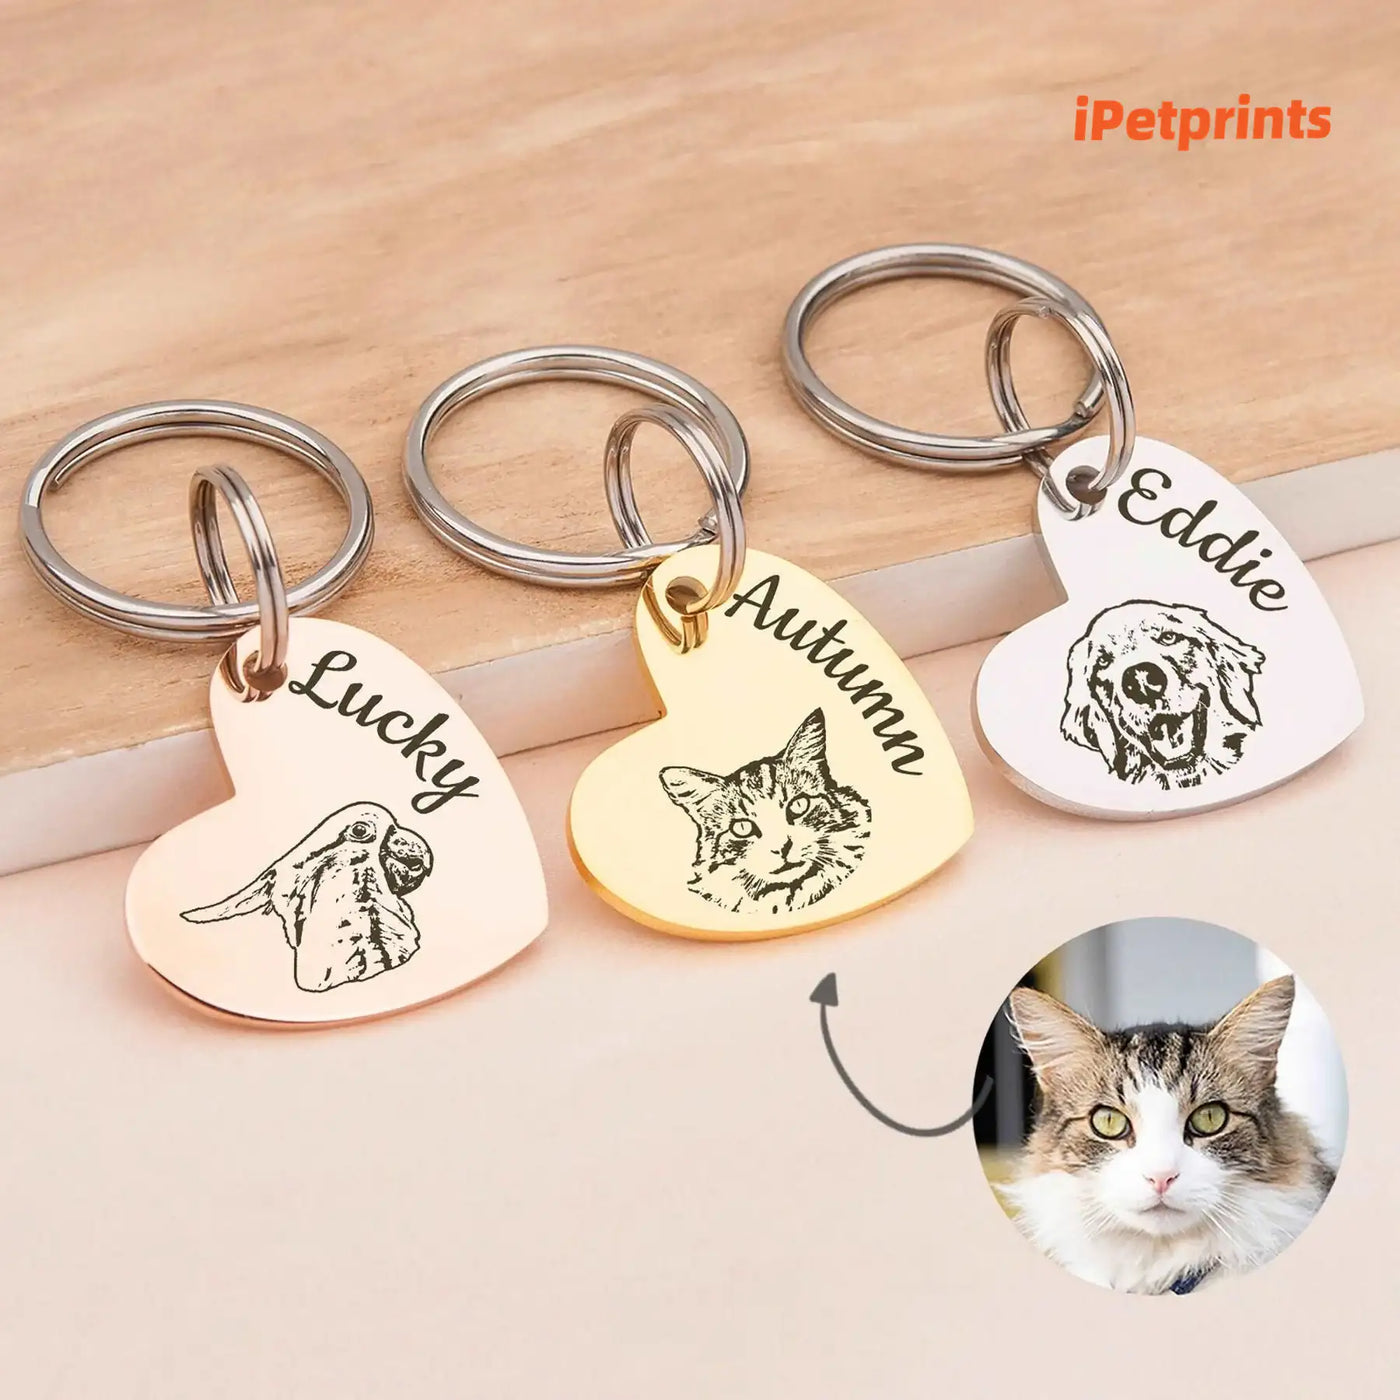 iPetprints Personalized Pet Keychain Heart Pendant